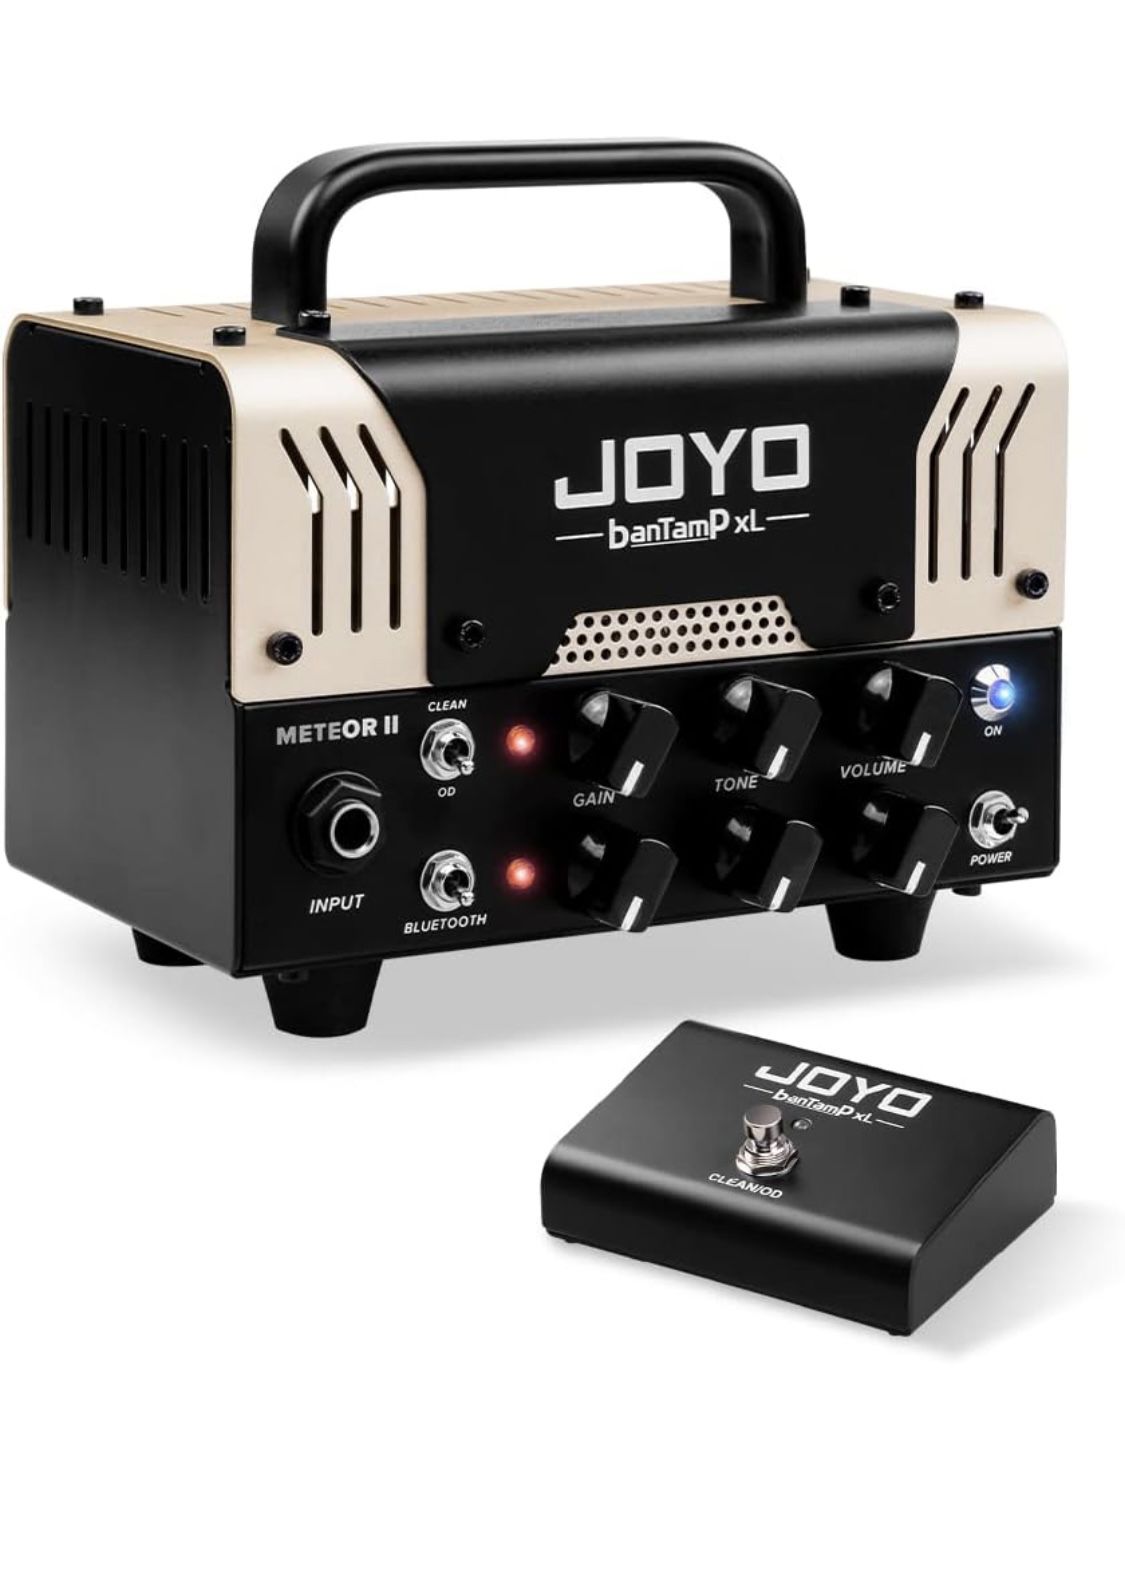 JOYO BanTamP xL Meteor II Dual Channel 20-Watt Bluetooth Guitar Amp Head